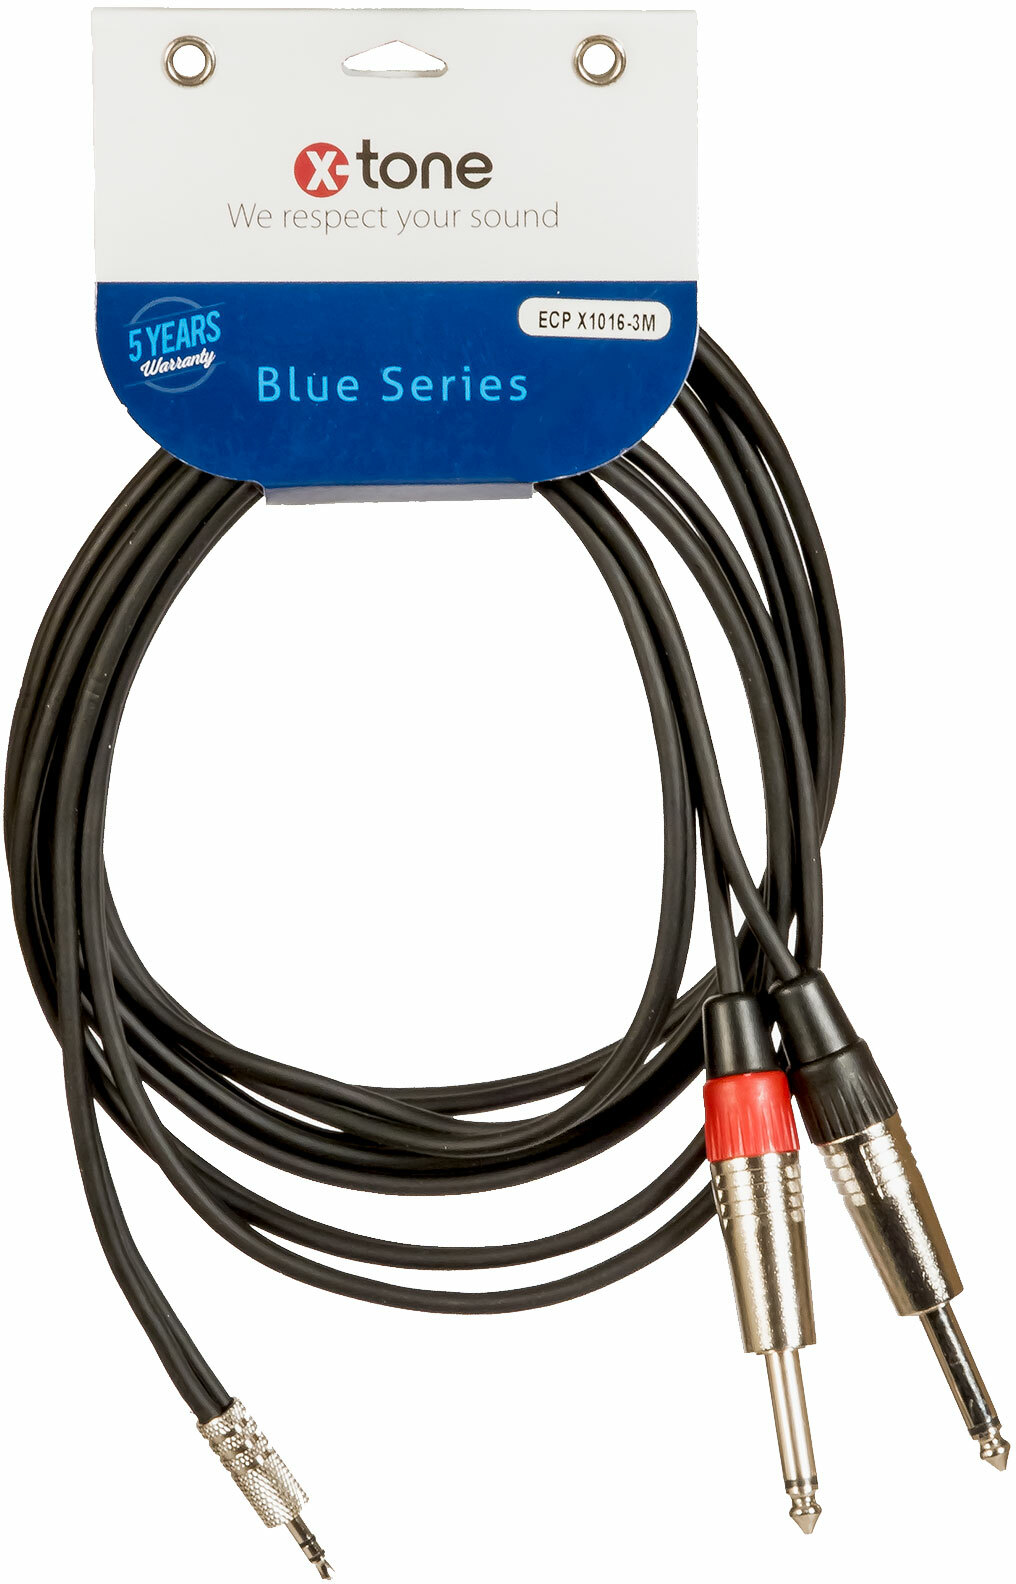 X-tone Mini Jack St / 2 Jack 3m Blue Series (x1016-3m) - Cable - Main picture